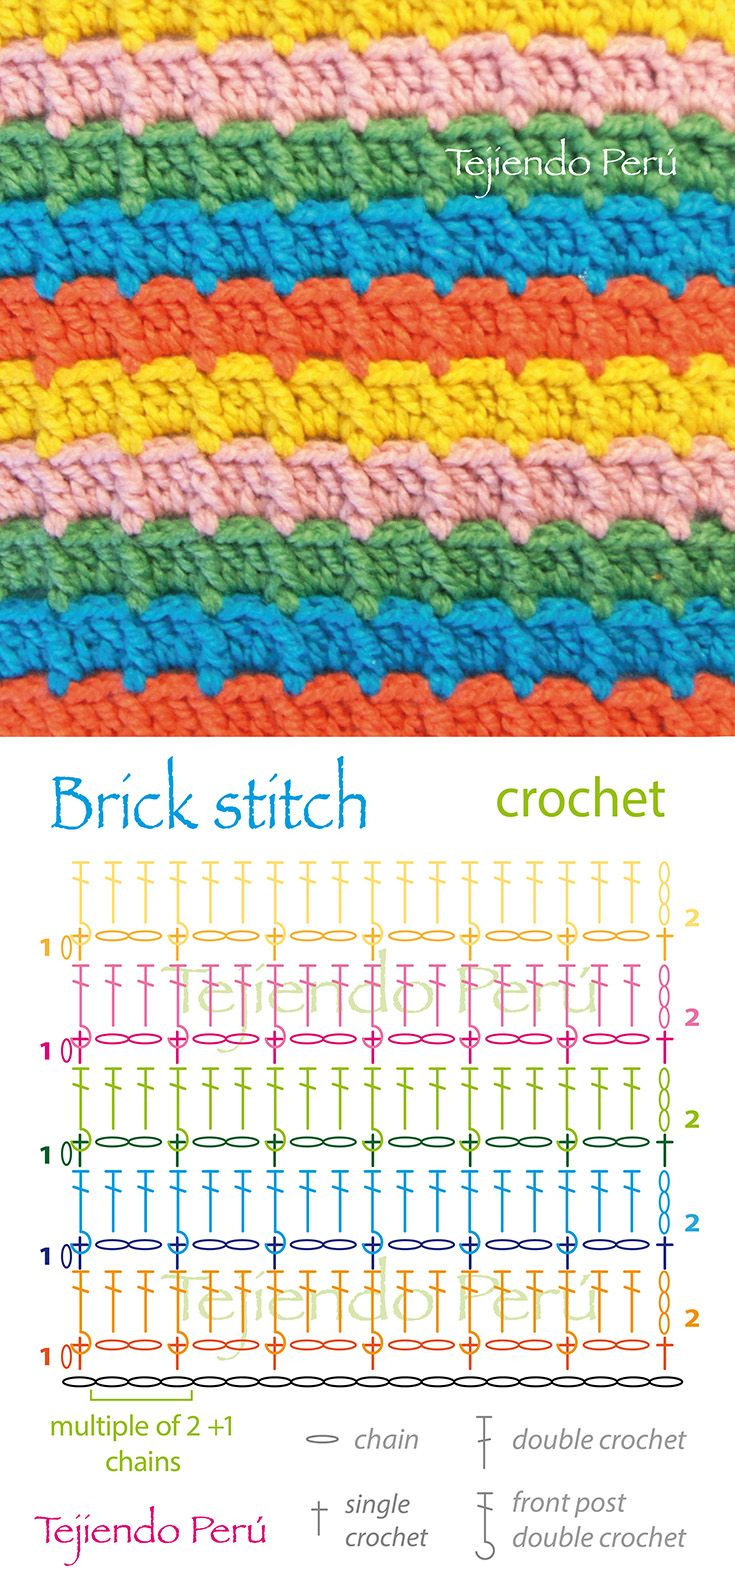 Crochet Brick Stitch Pattern Crochet Brick Stitch Diagram Pattern Or Chart Link To The Front